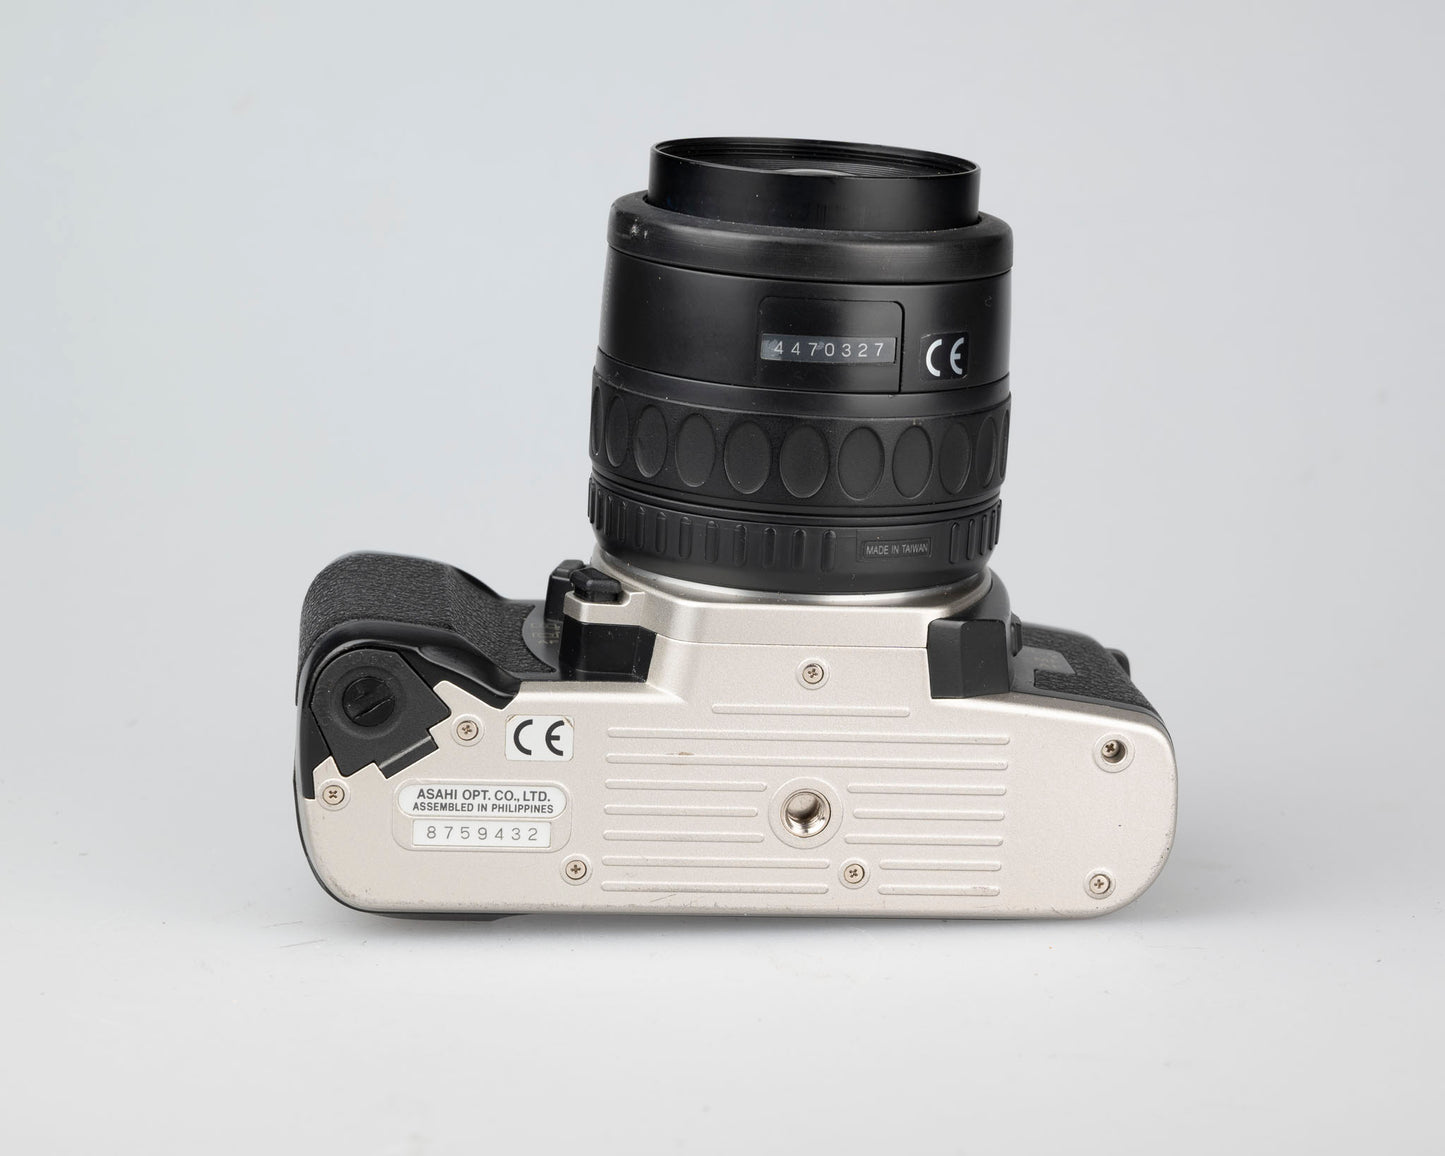 Pentax MZ-5N 35mm SLR w/ SMC Pentax-F 28-80mm lens (serial 8759432)